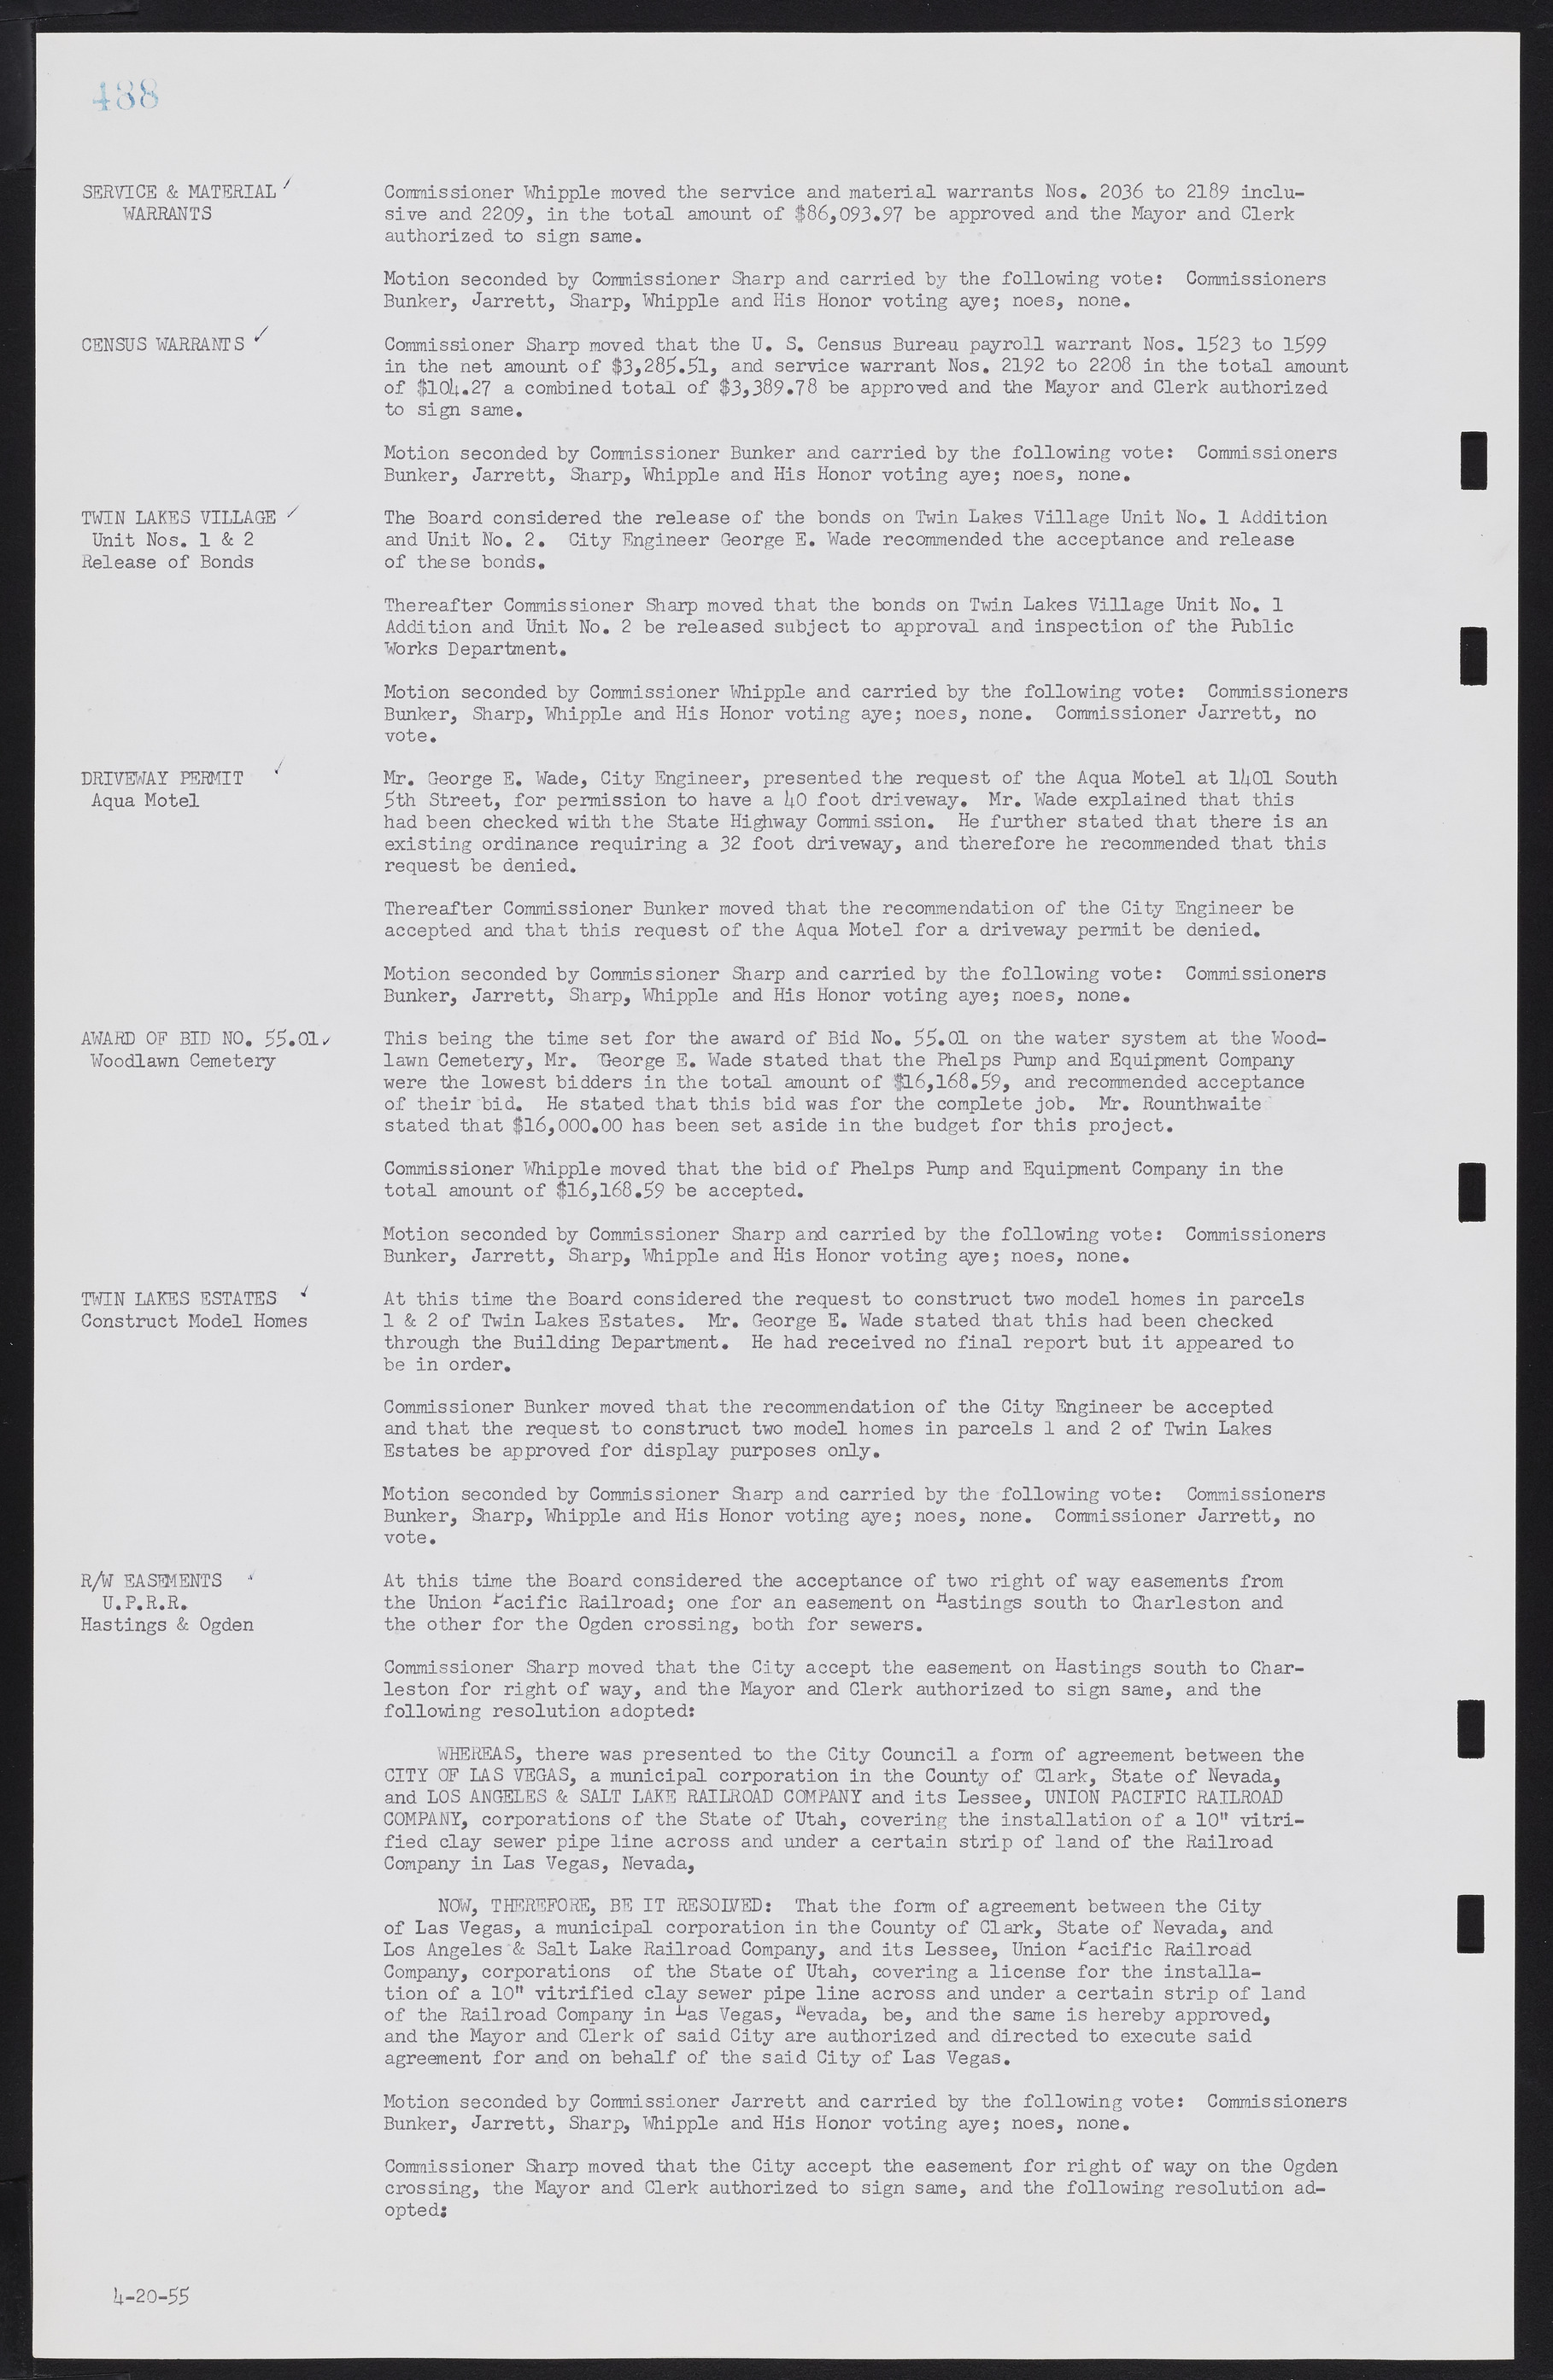 Las Vegas City Commission Minutes, February 17, 1954 to September 21, 1955, lvc000009-494